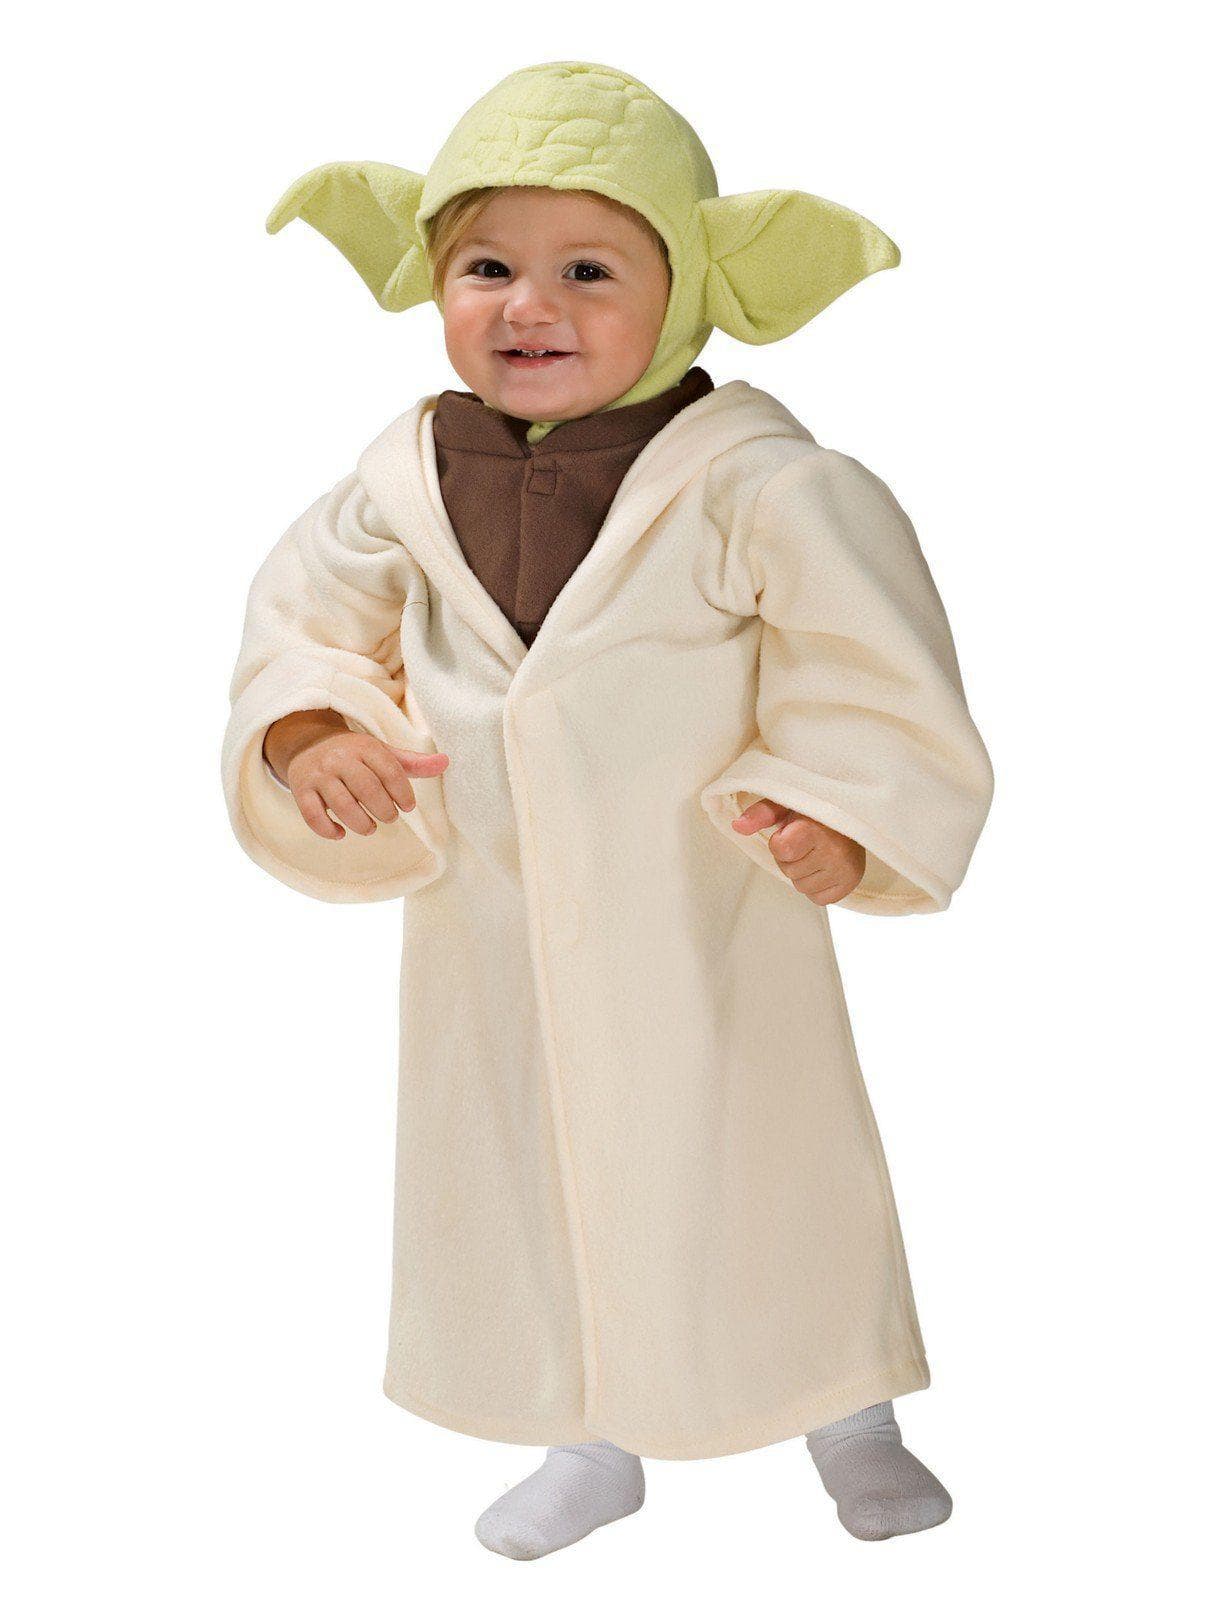 Kids Classic Star Wars Yoda Costume - costumes.com